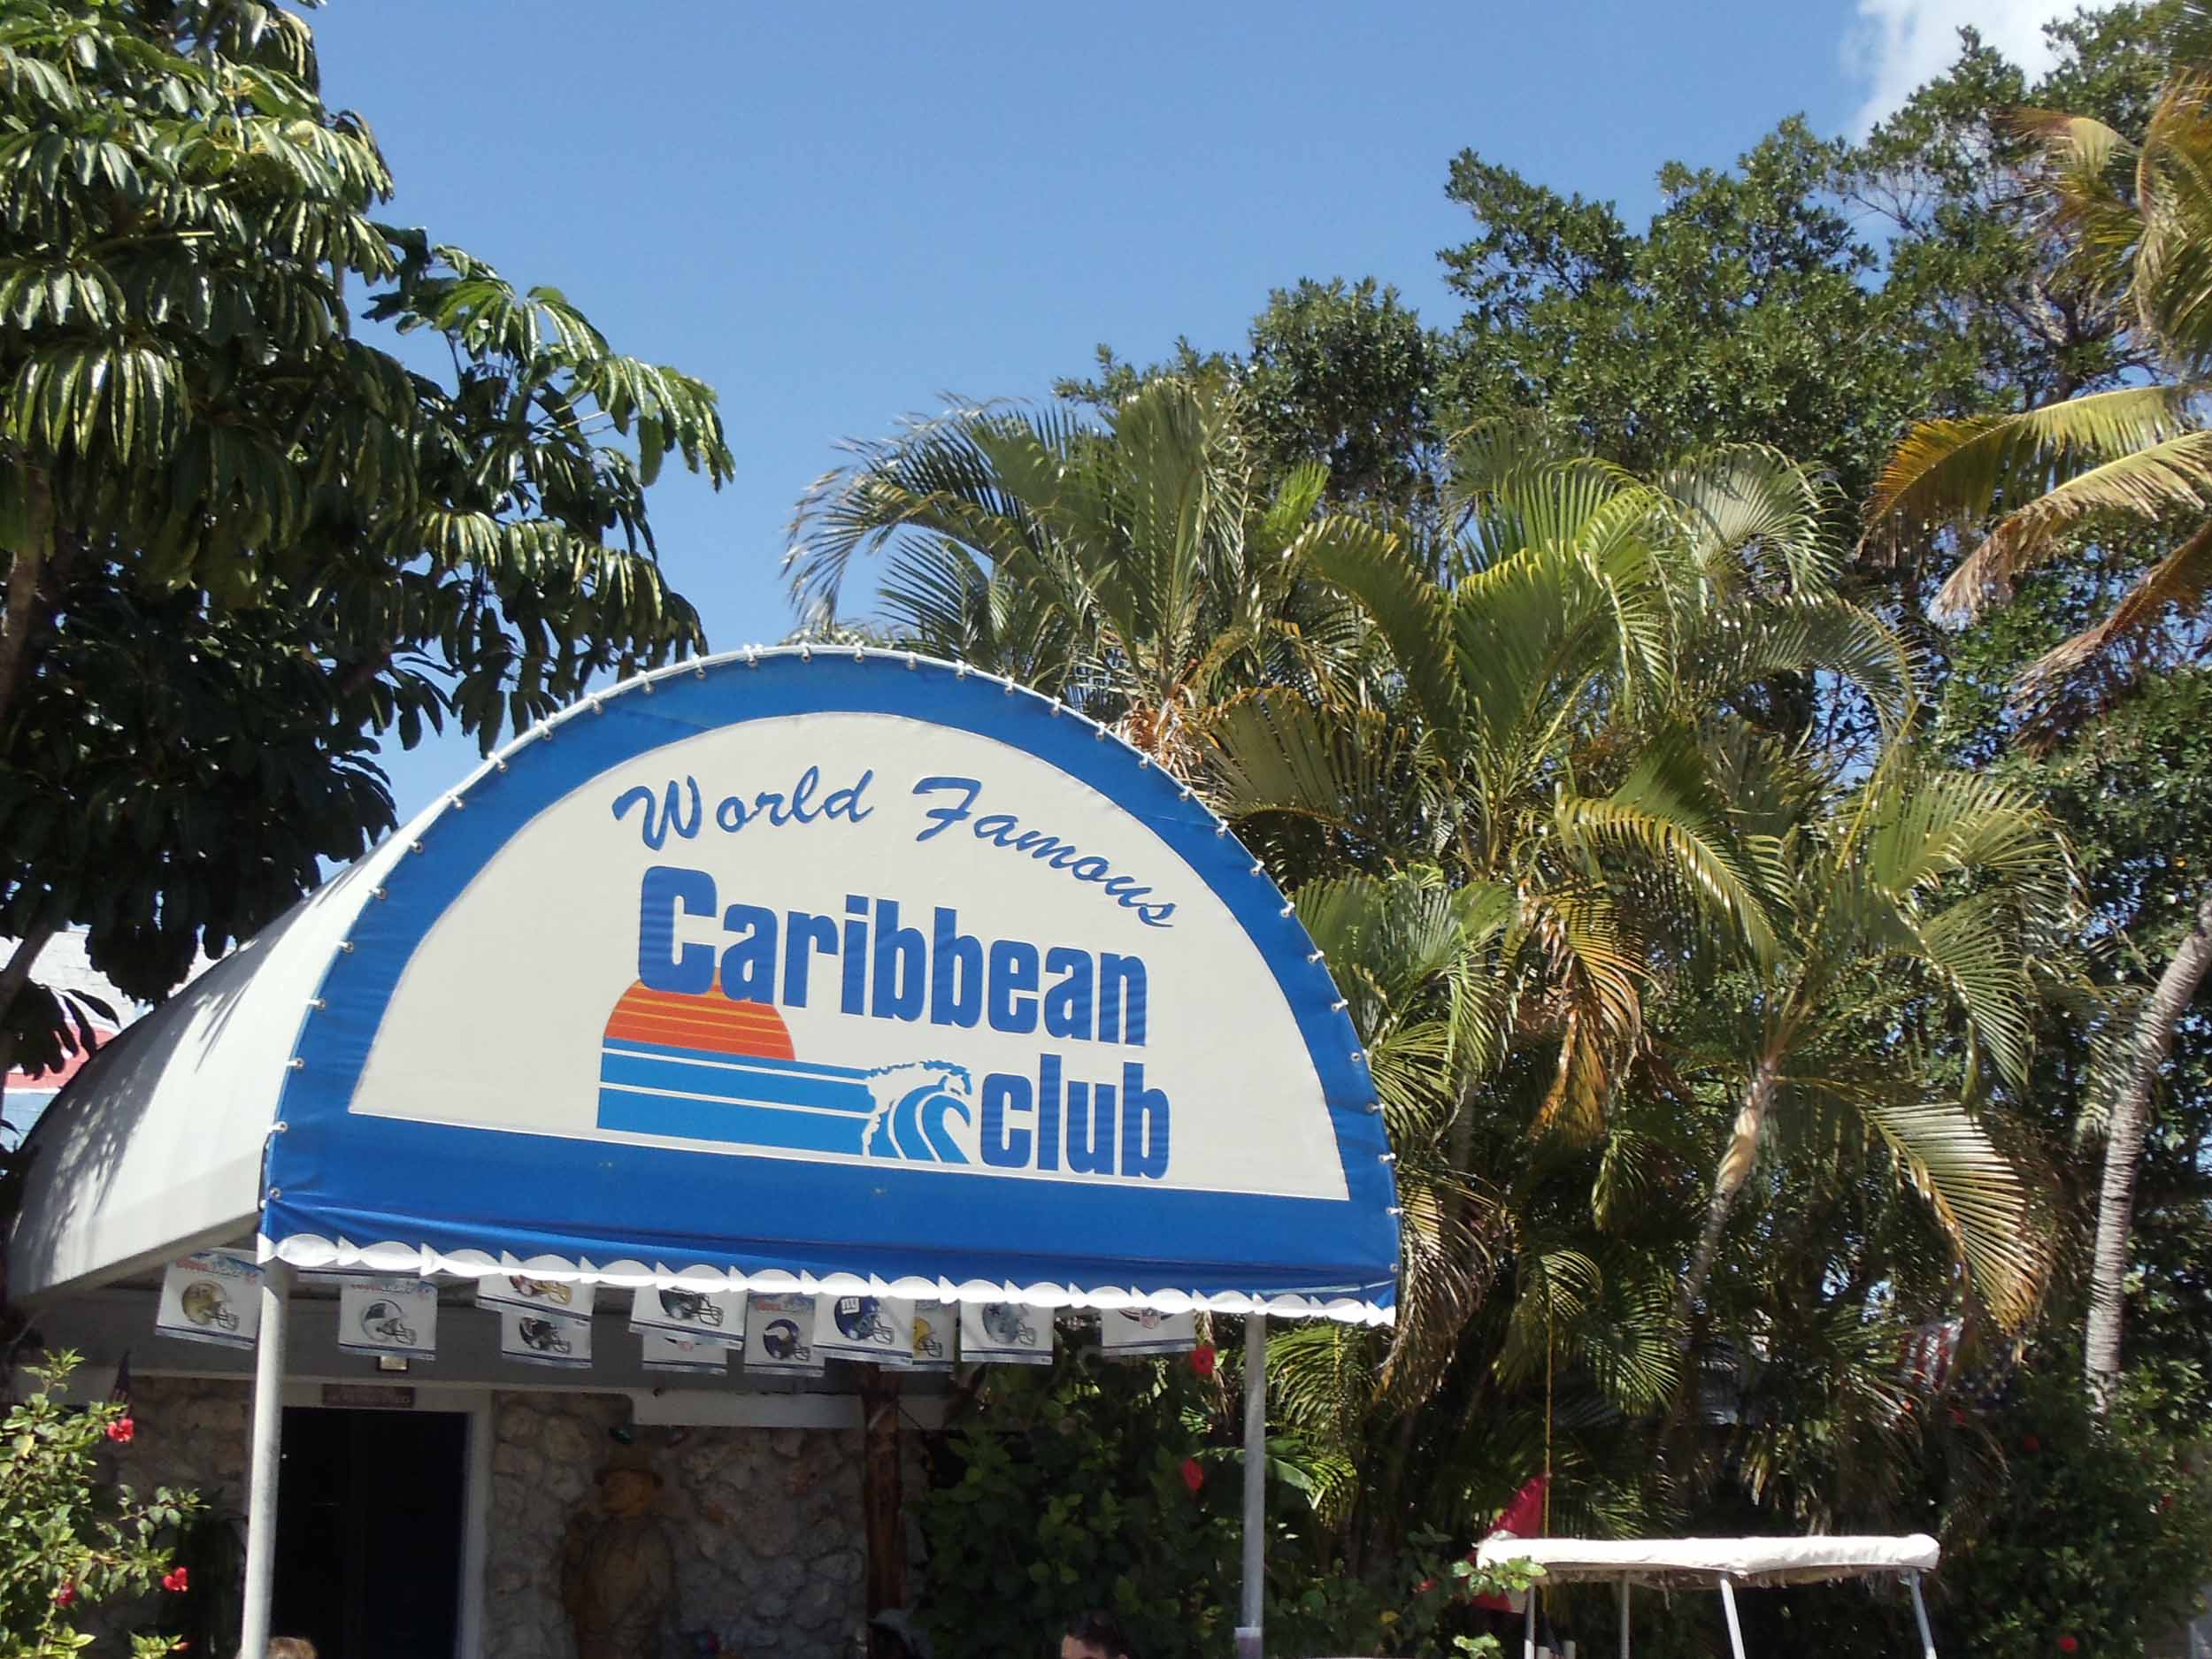 Caribbean Club Entrance